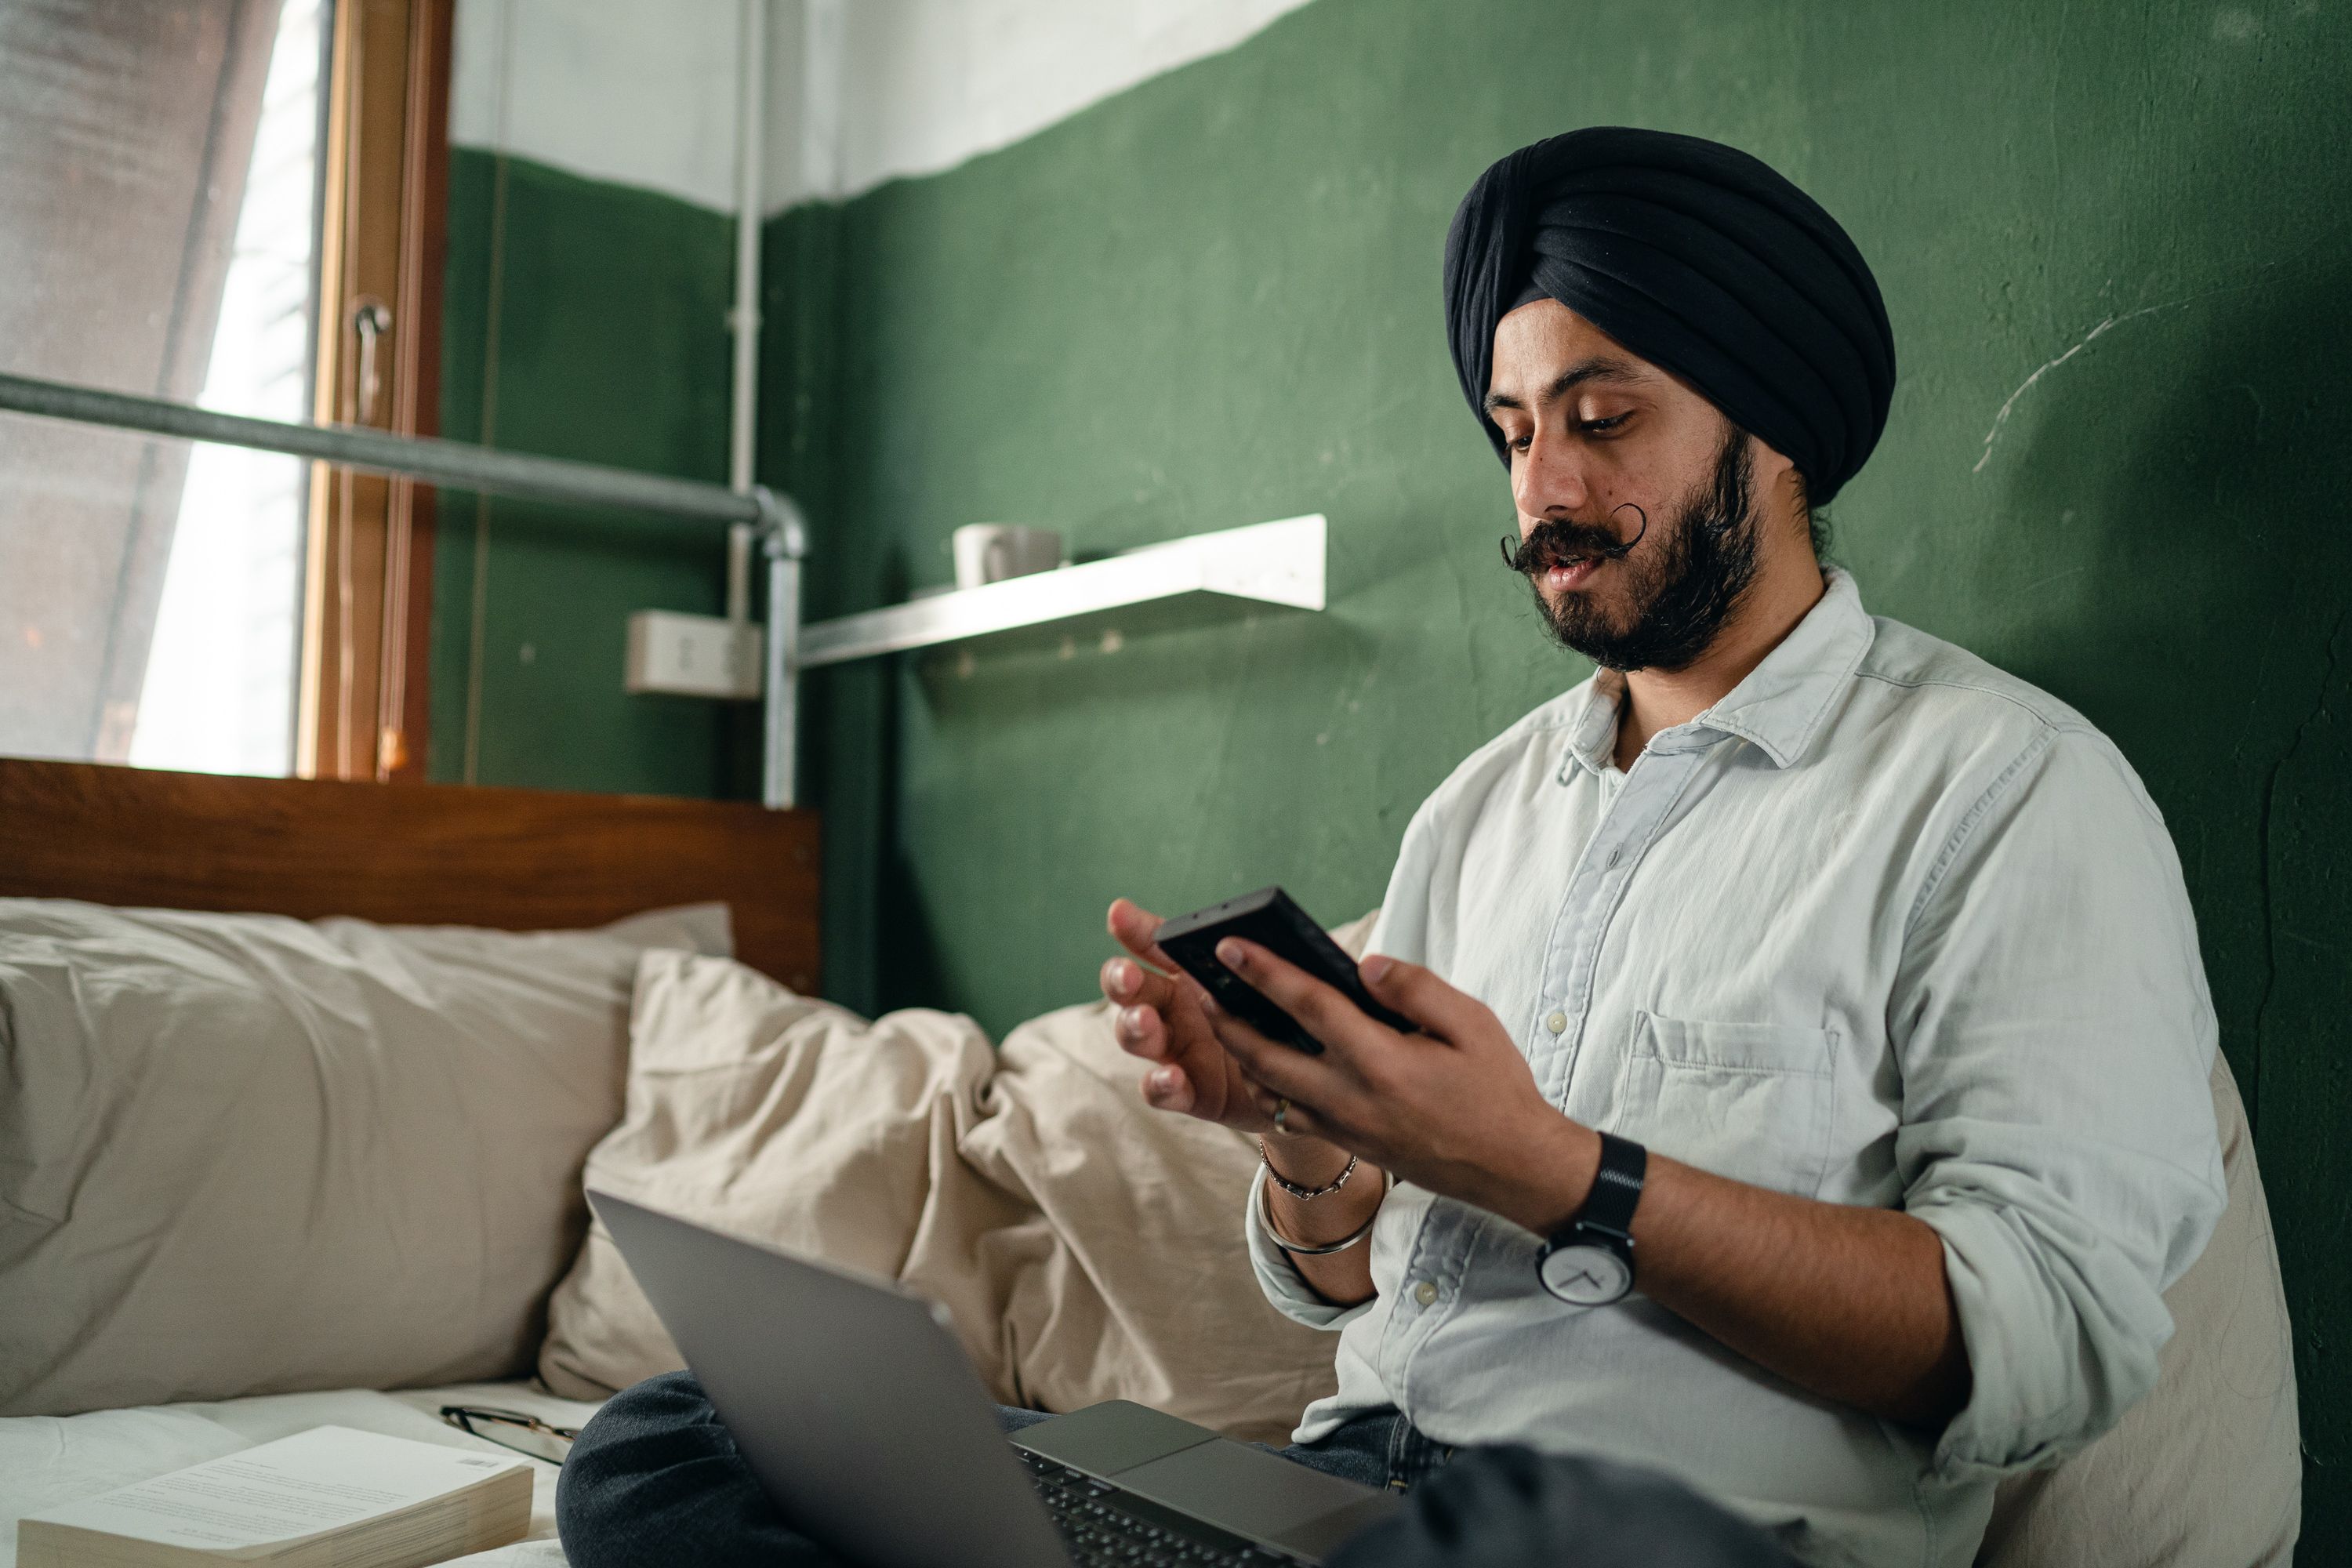 Sikh man sitting on bed using phone